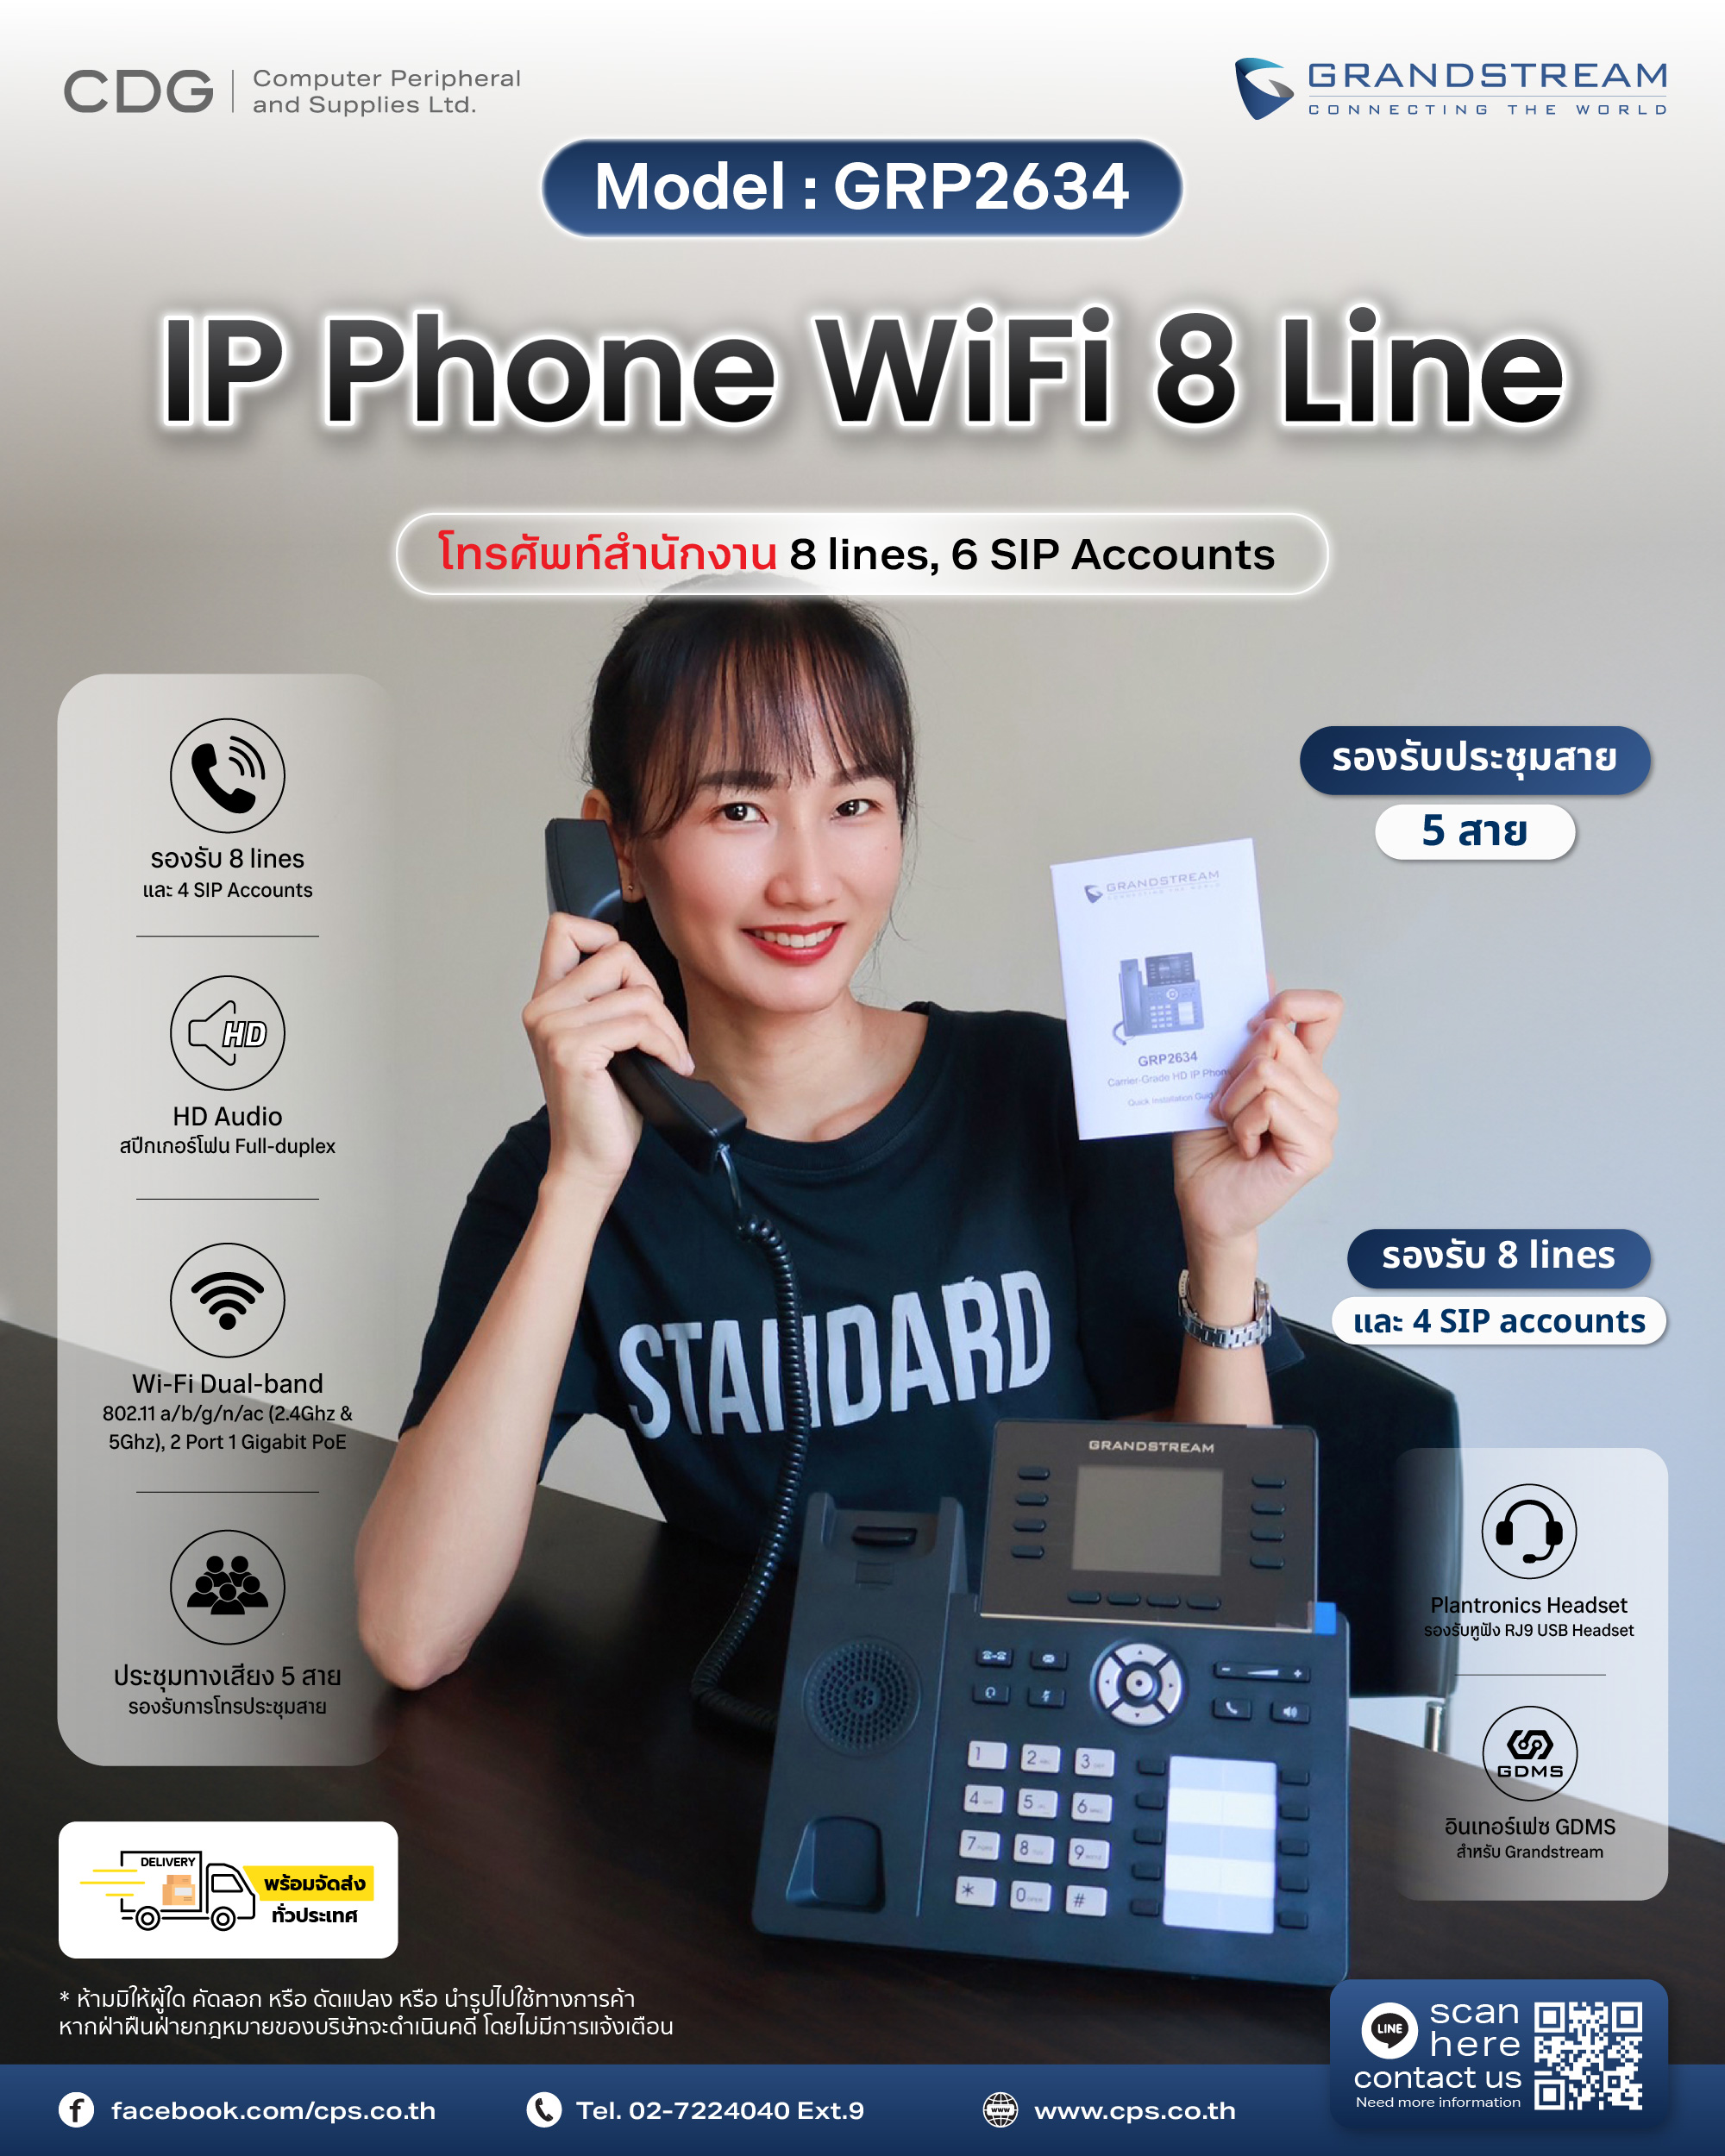 IP Phone Grandstream GRP2634 WiFi 8 lines, 6 SIP Accounts